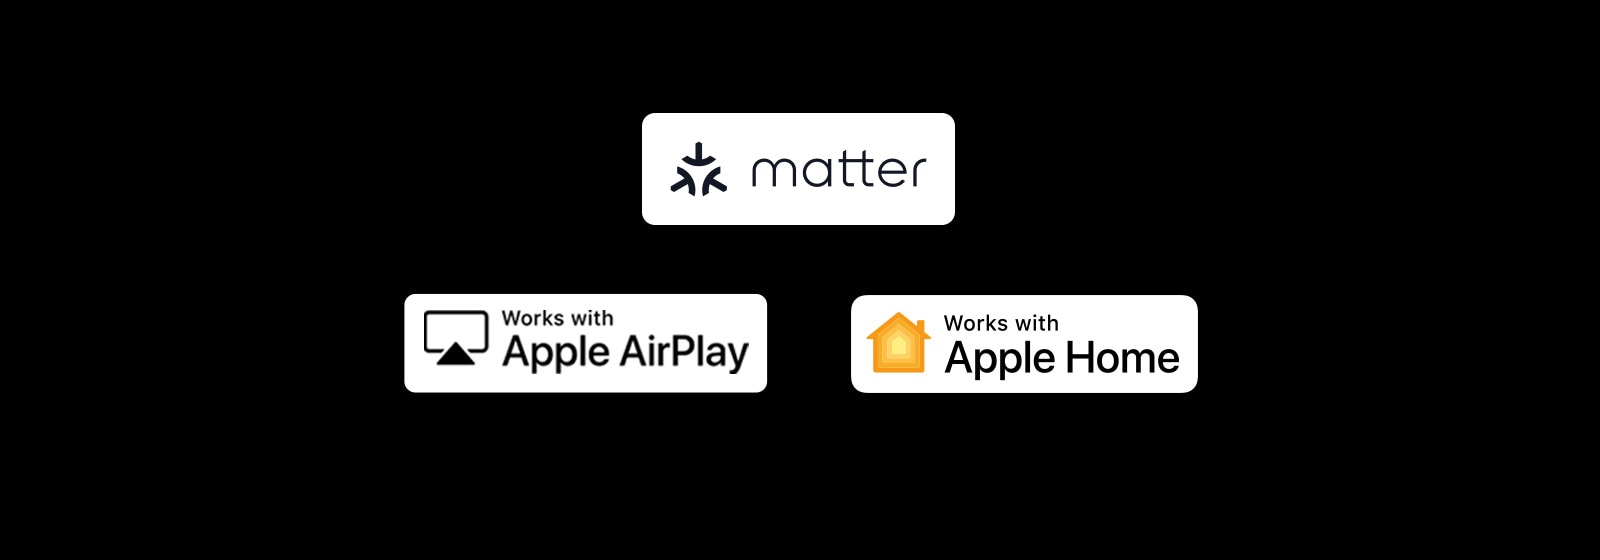 Az Apple AirPlay logó A works with Apple Home logó A works with Matter logó